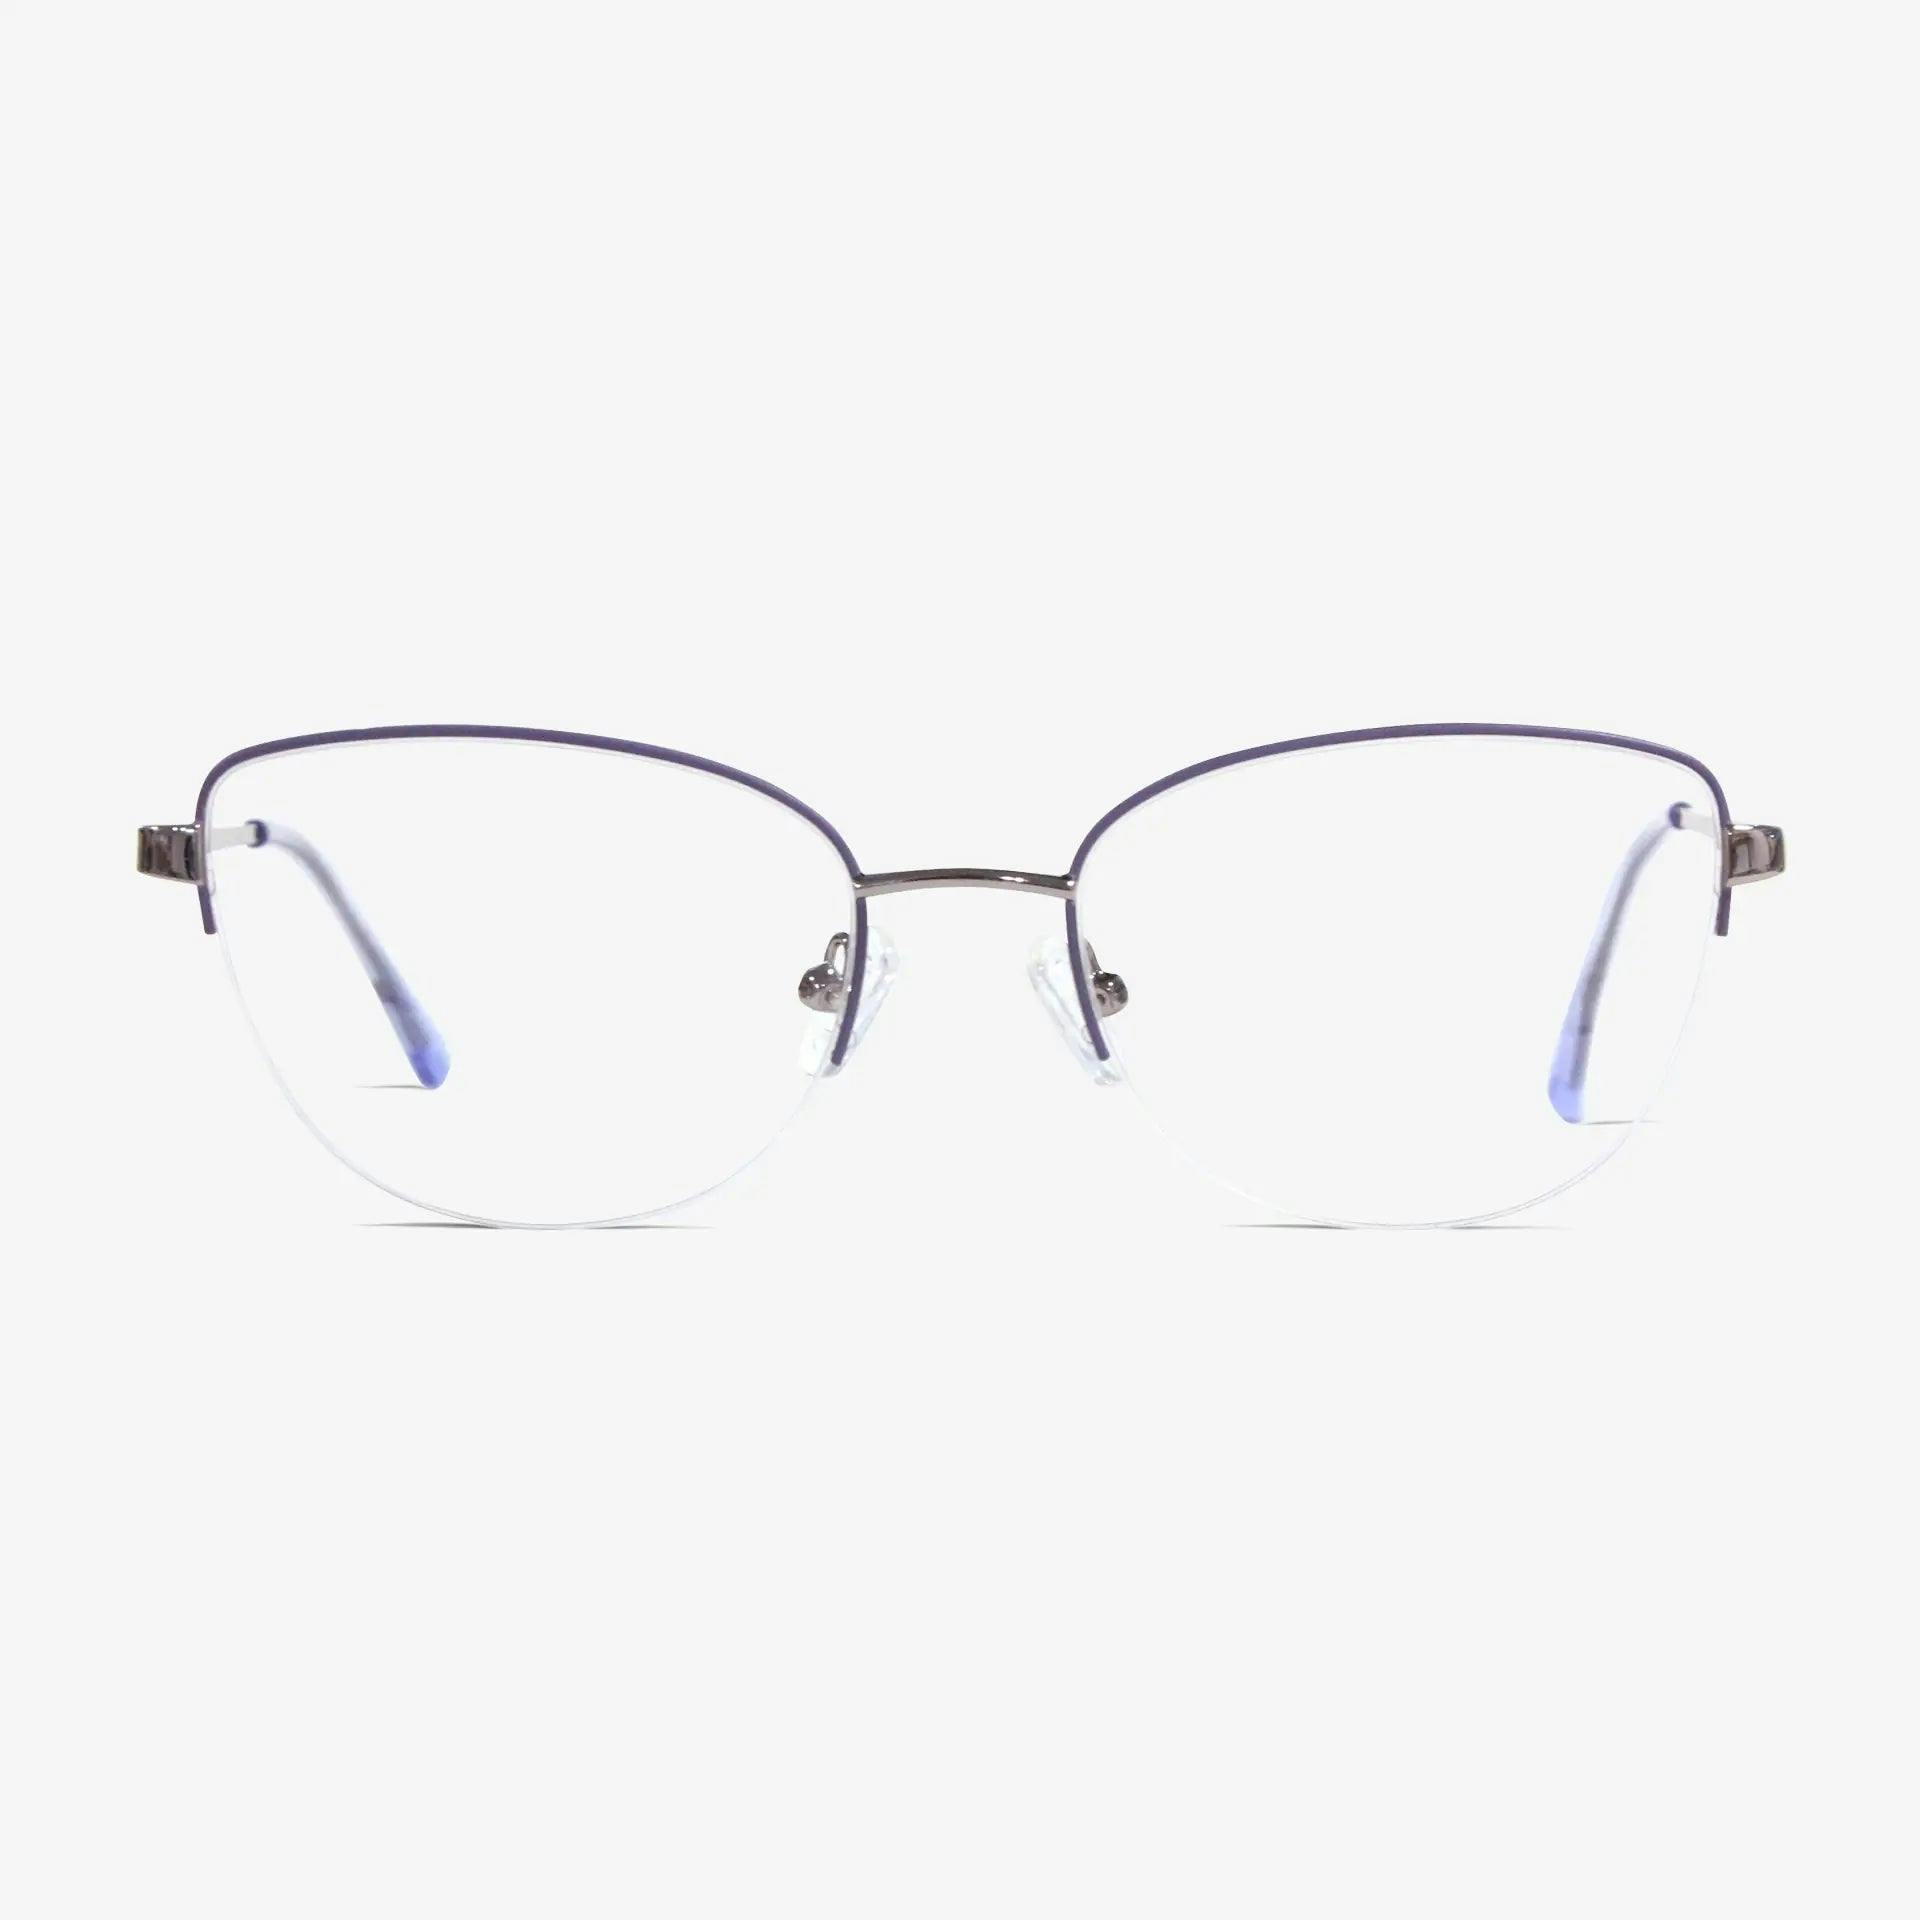 Huxley glasses | Corrine Heliotrope 